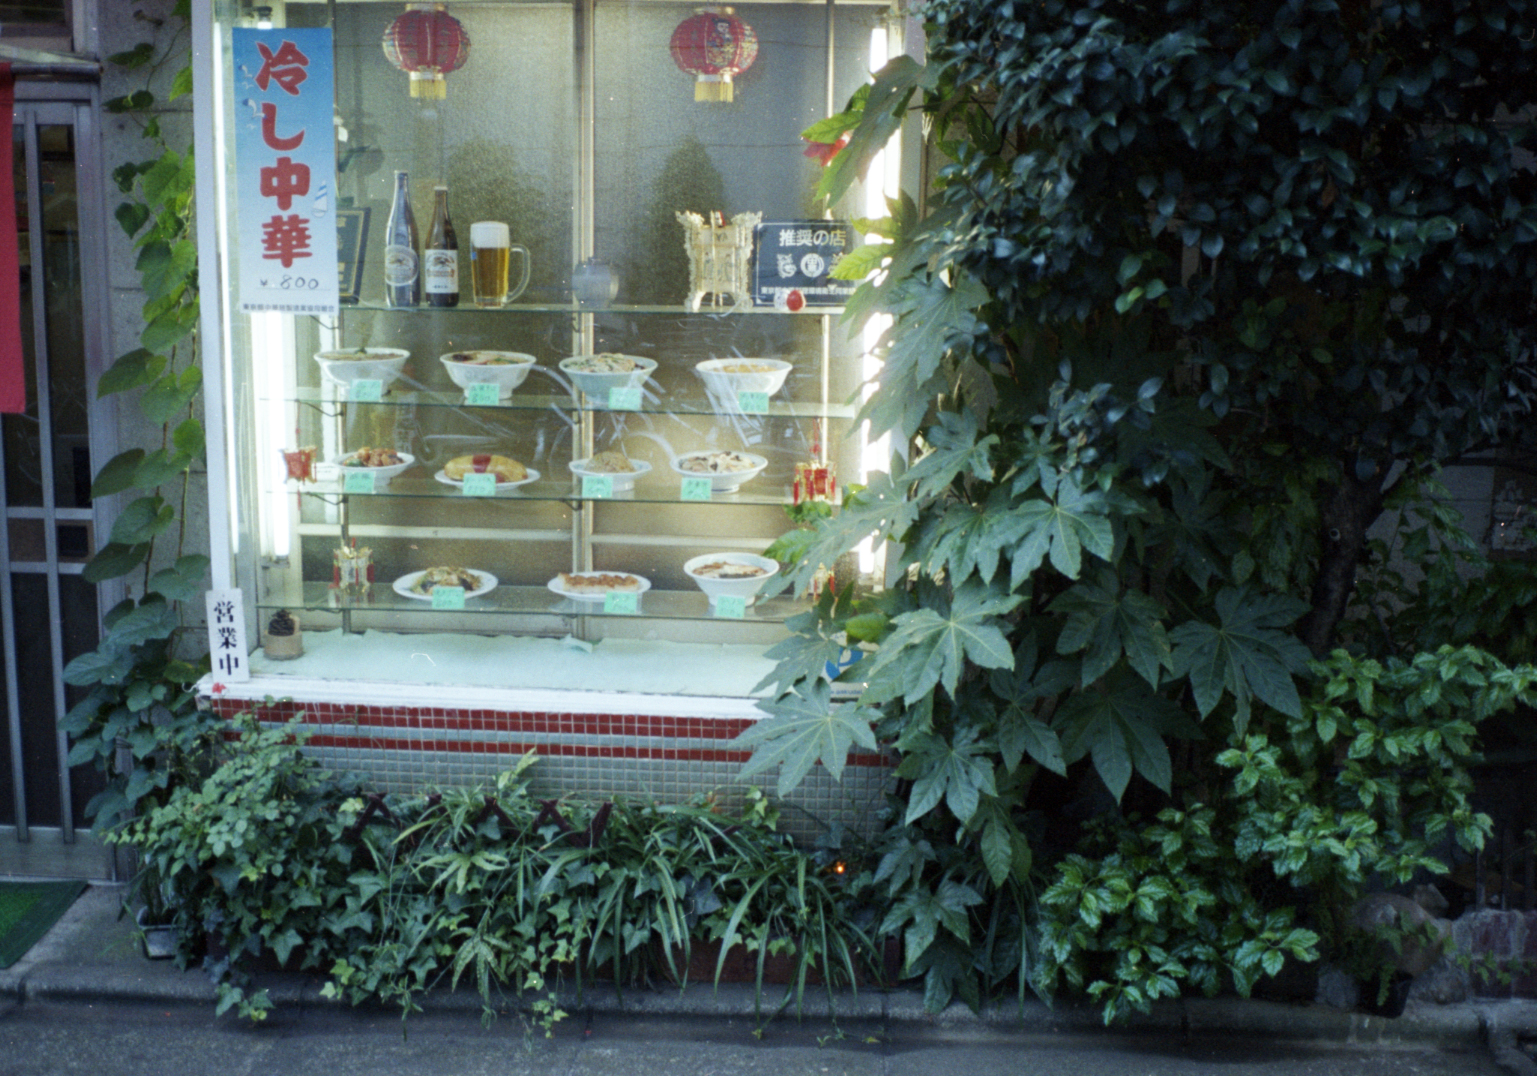 a shop display case next to a green shrub